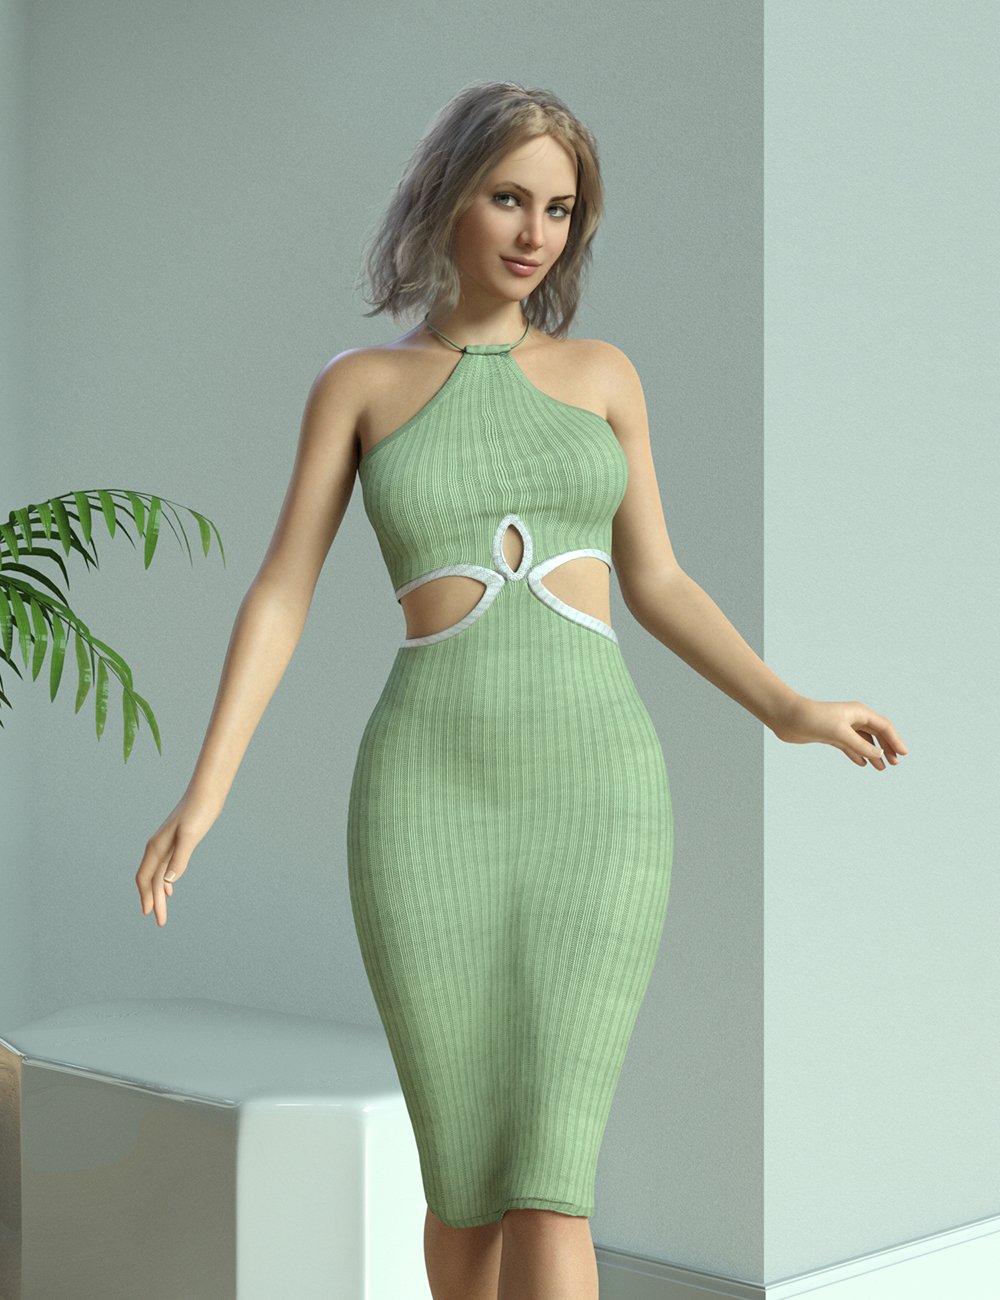 dForce MK Malena Midi Dress for Genesis 8 and 8.1 Females by: wsmonkeyking, 3D Models by Daz 3D